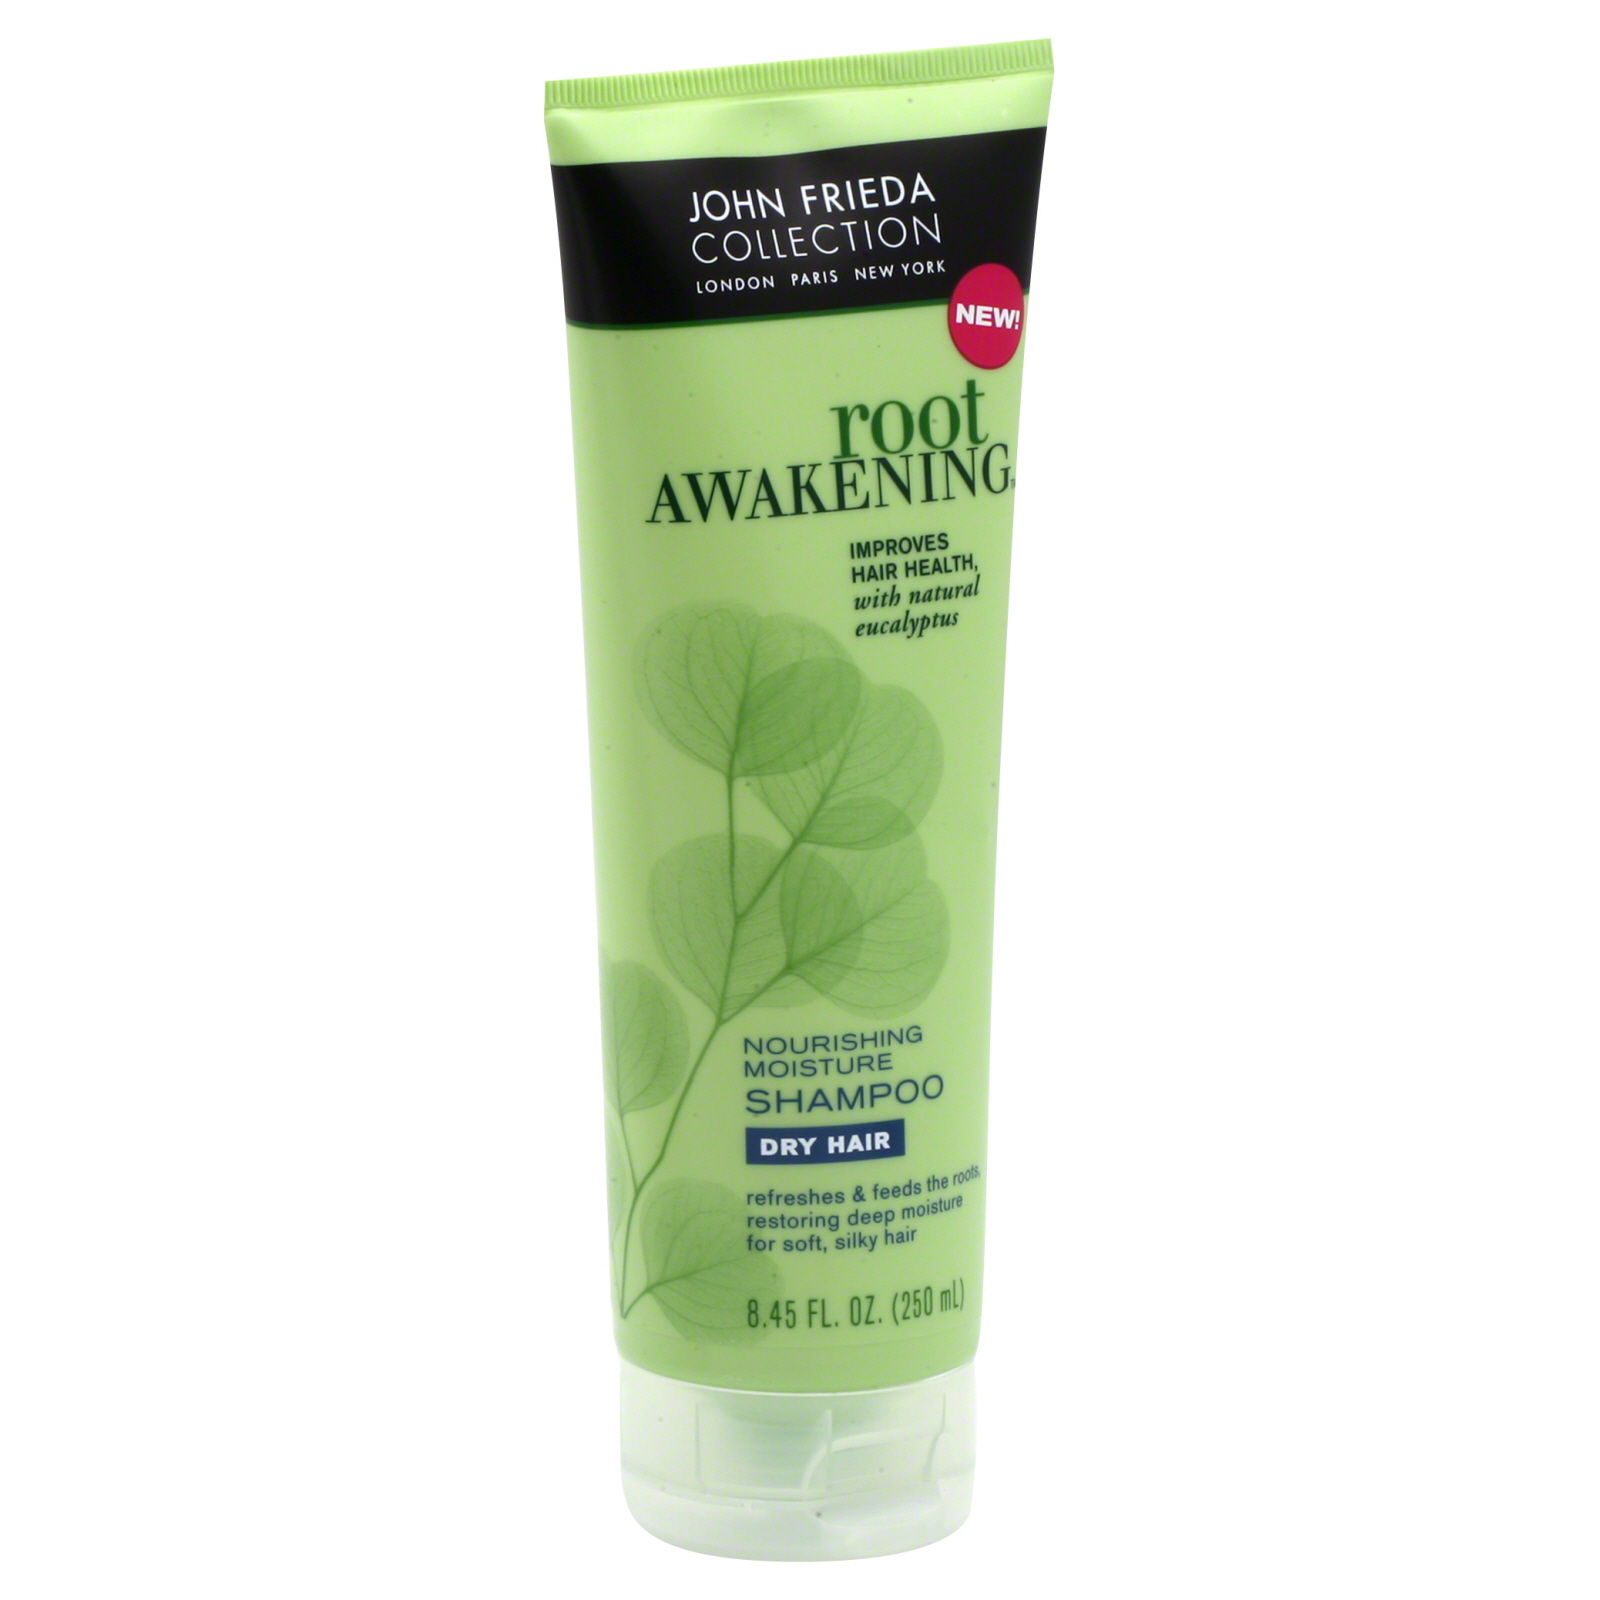 John Frieda Root Awakening Shampoo, Nourishing Moisture, Dry Hair, 8.45 fl oz (250 ml)